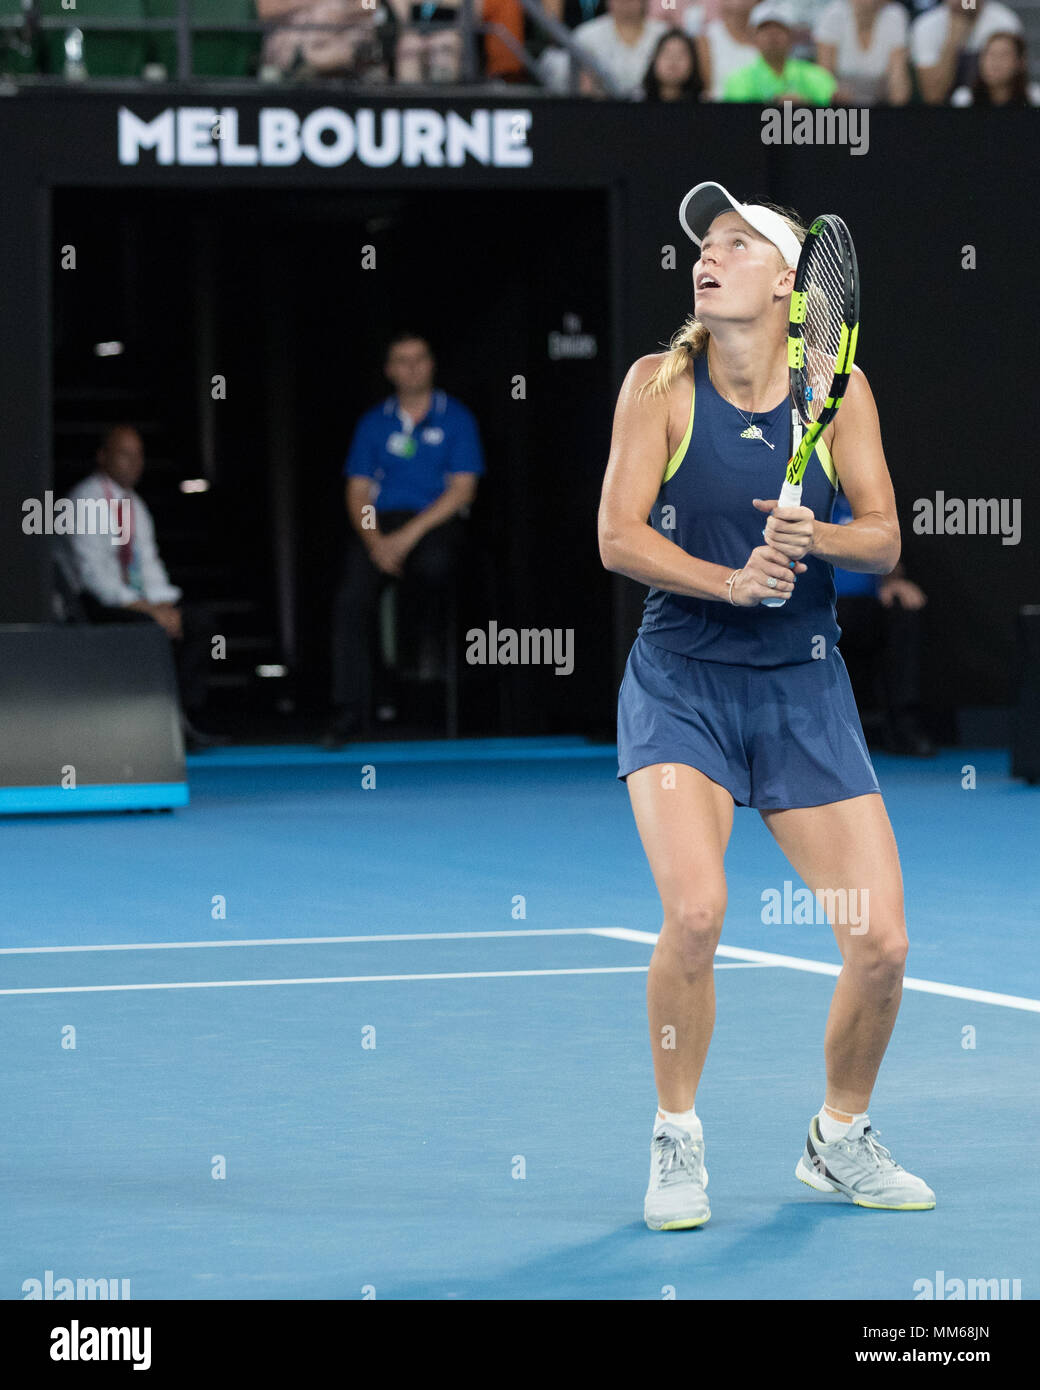 Danish tennis player Caroline Wozniacki playing backhand shot in Australian Open 2018 Tennis Tournament, Melbourne Park, Melbourne, Victoria, Australi Stock Photo